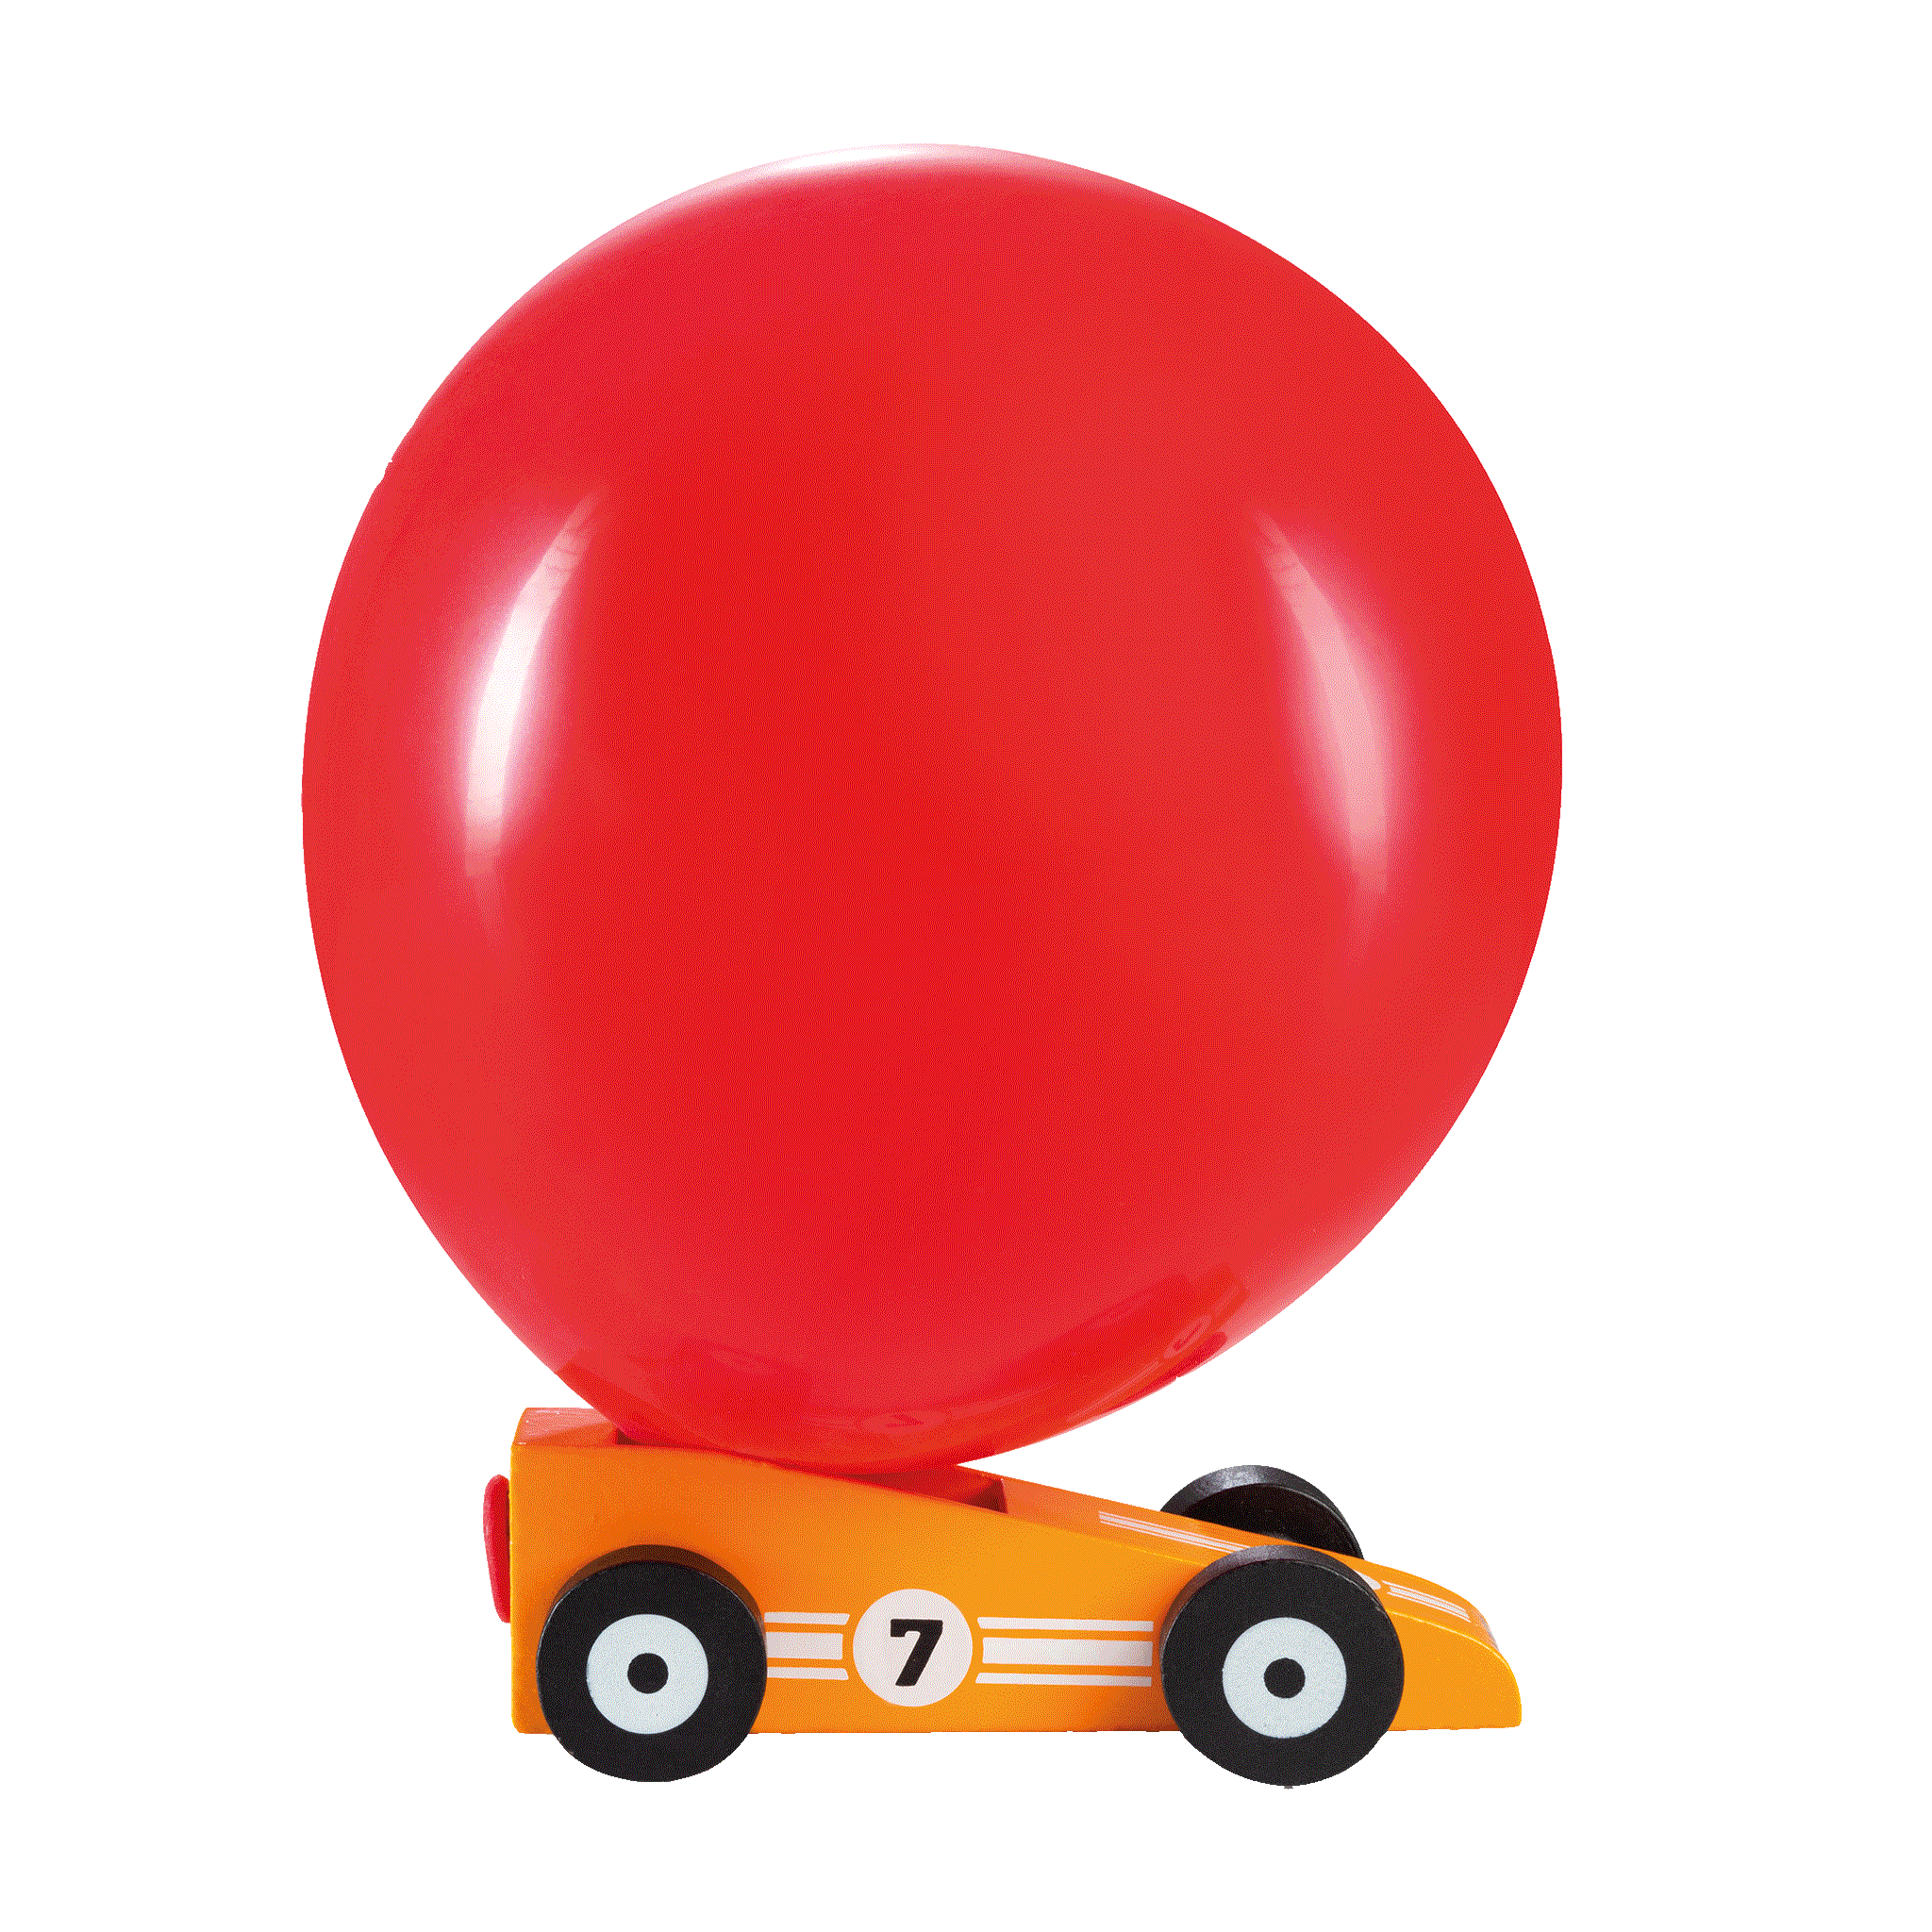 Balloon Racer Orangestar